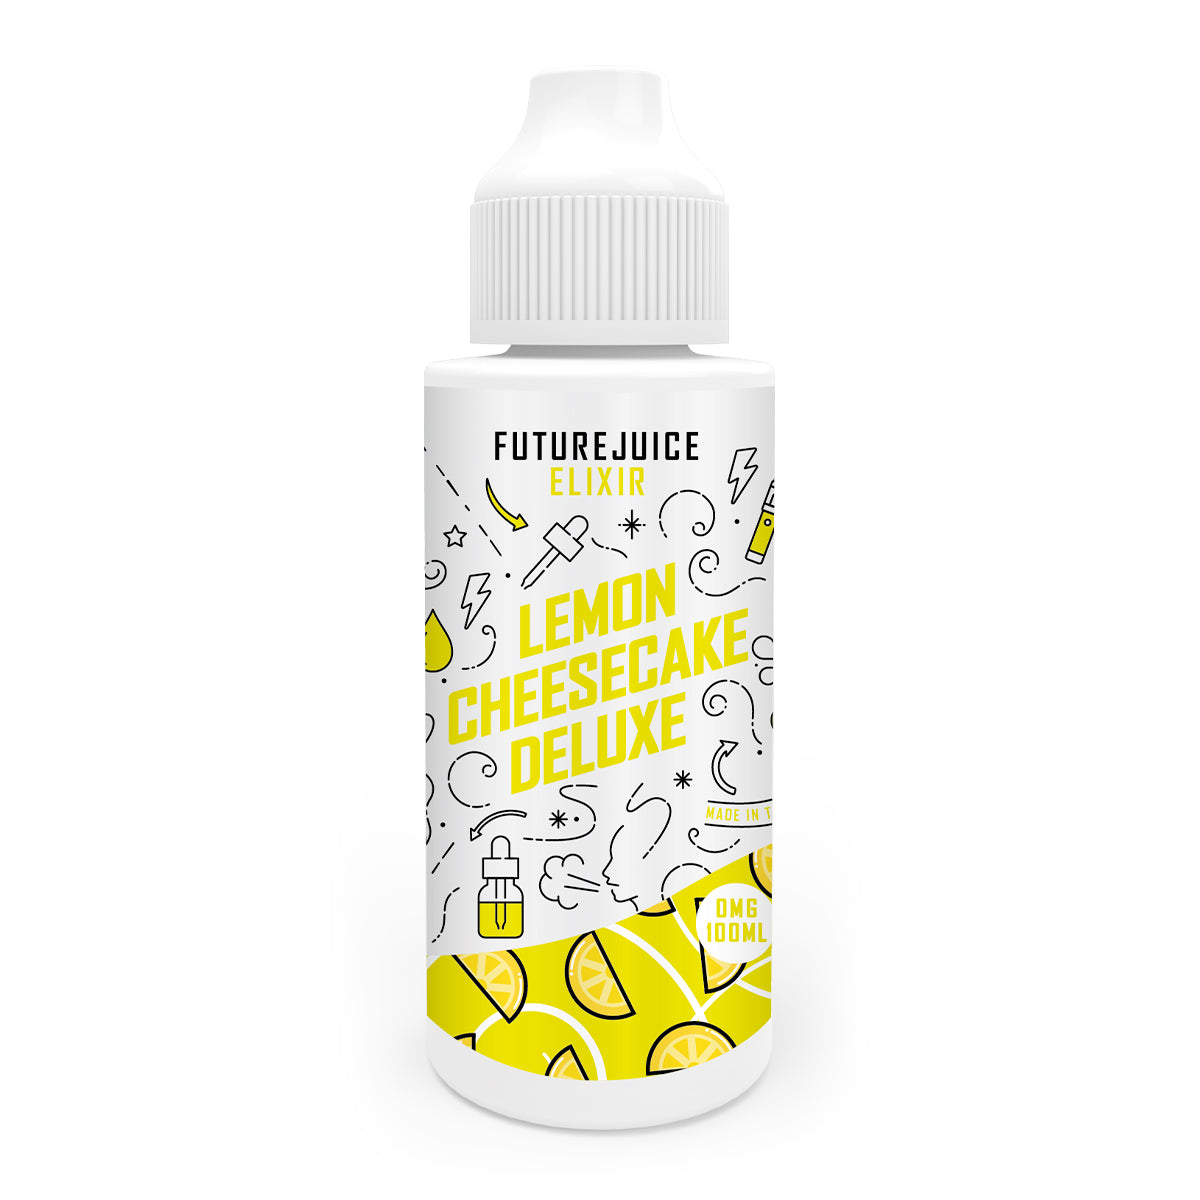 Lemon Cheesecake Deluxe 100ml Shortfill by Future Juice Elixir